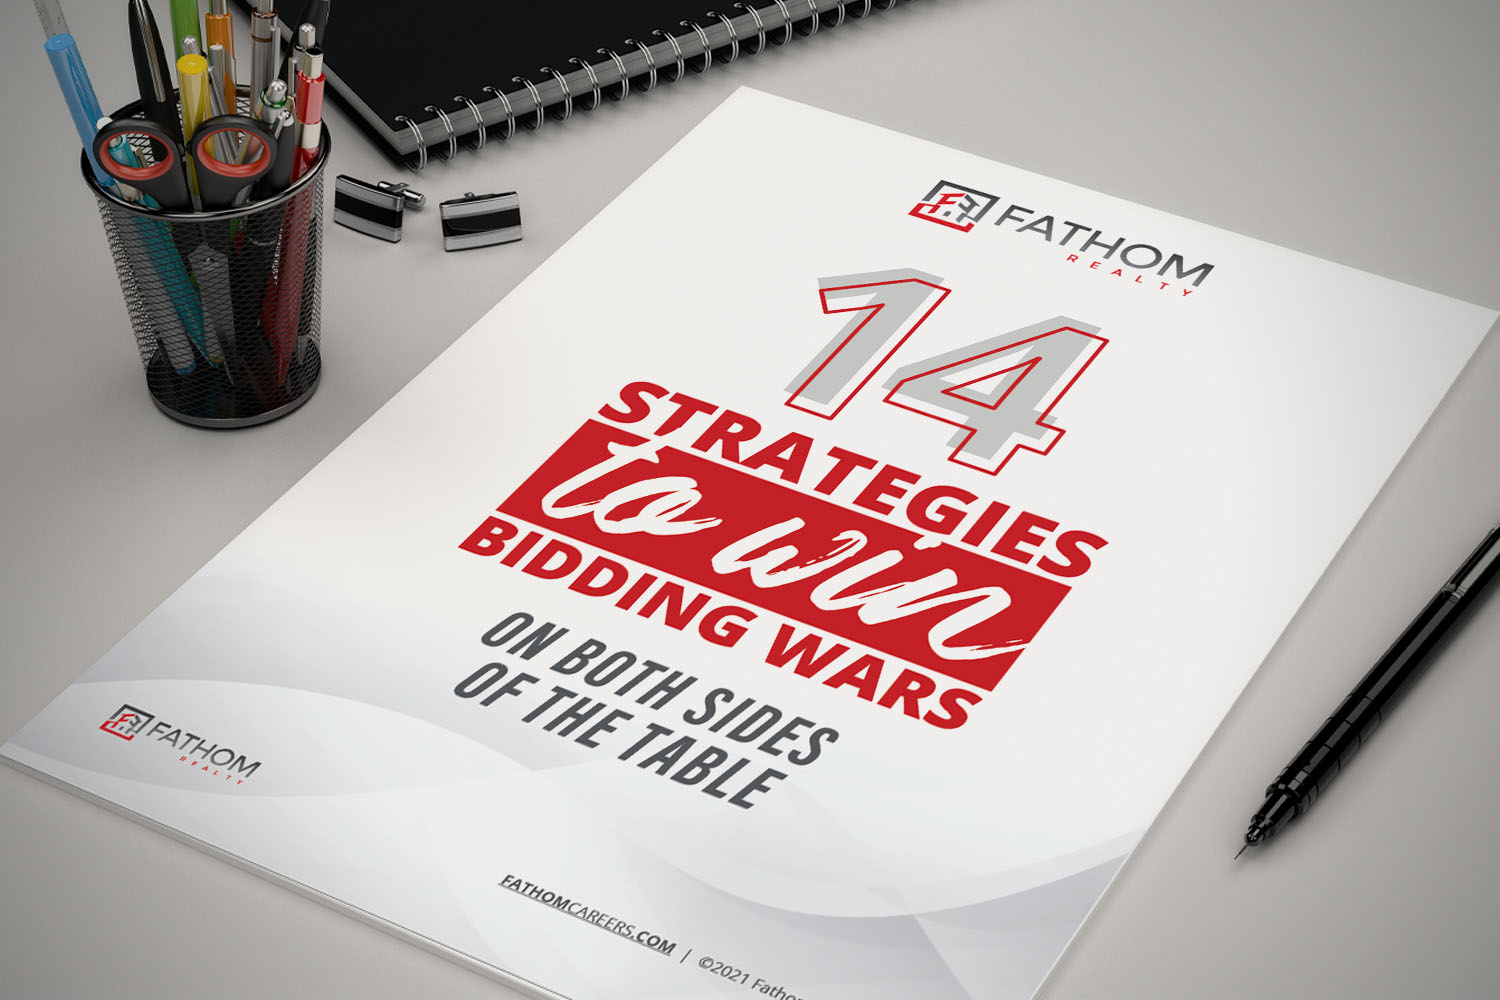 14 Strategies to Win Bidding Wars